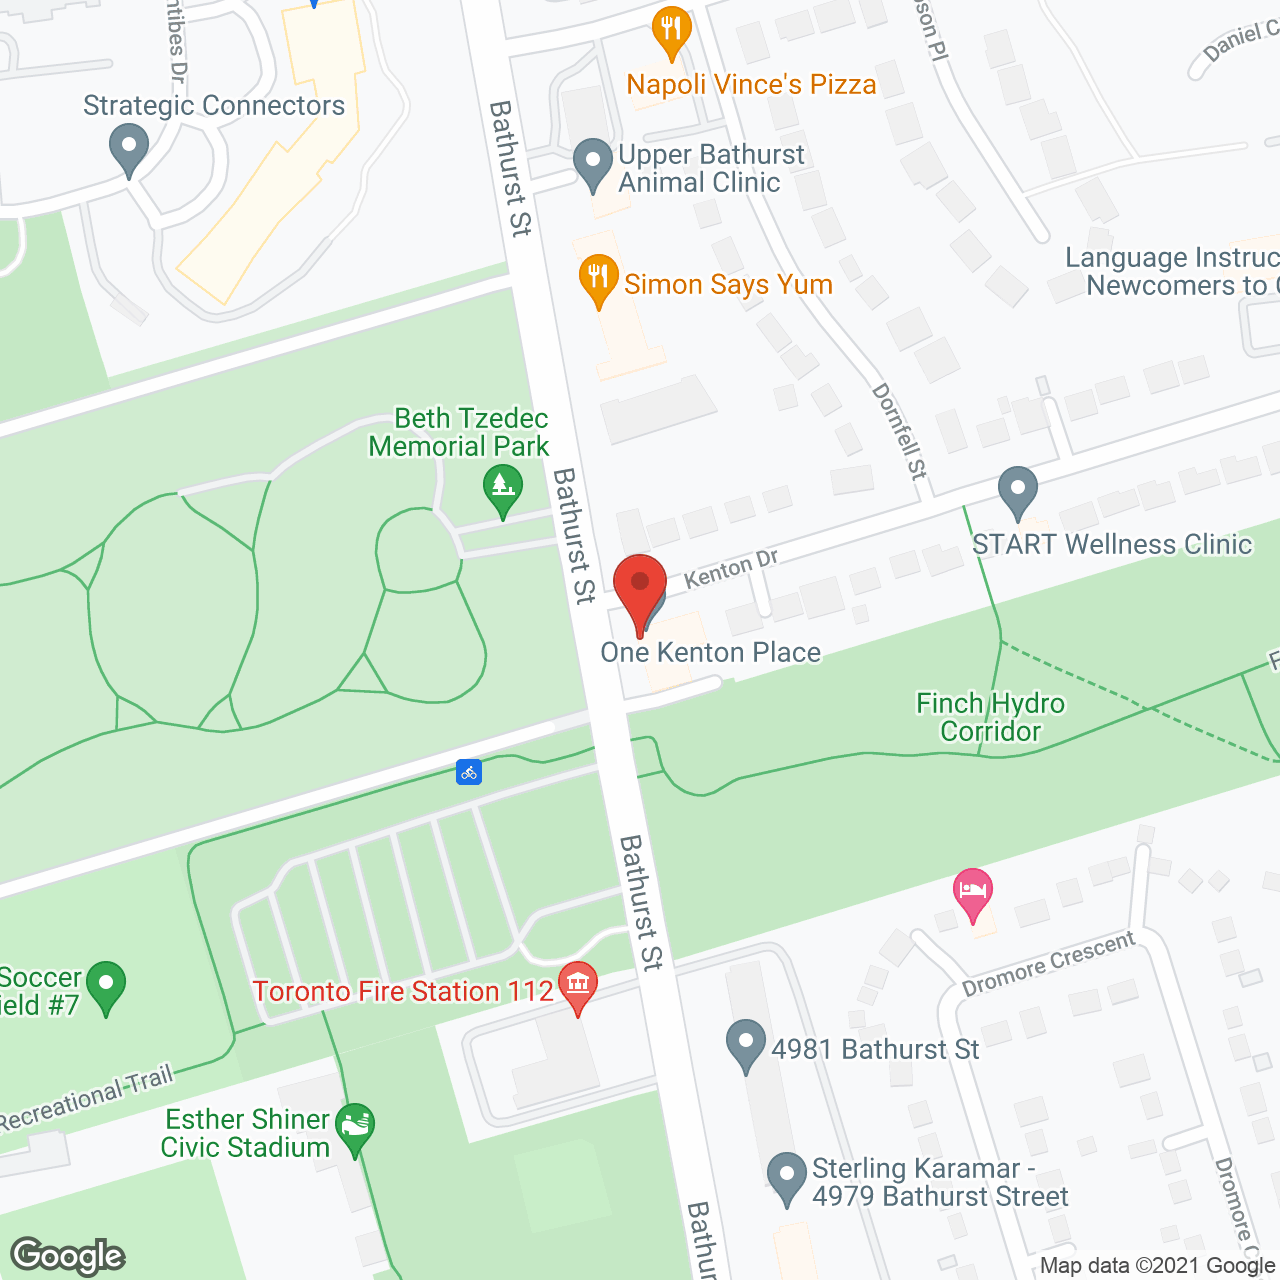 One Kenton Place in google map